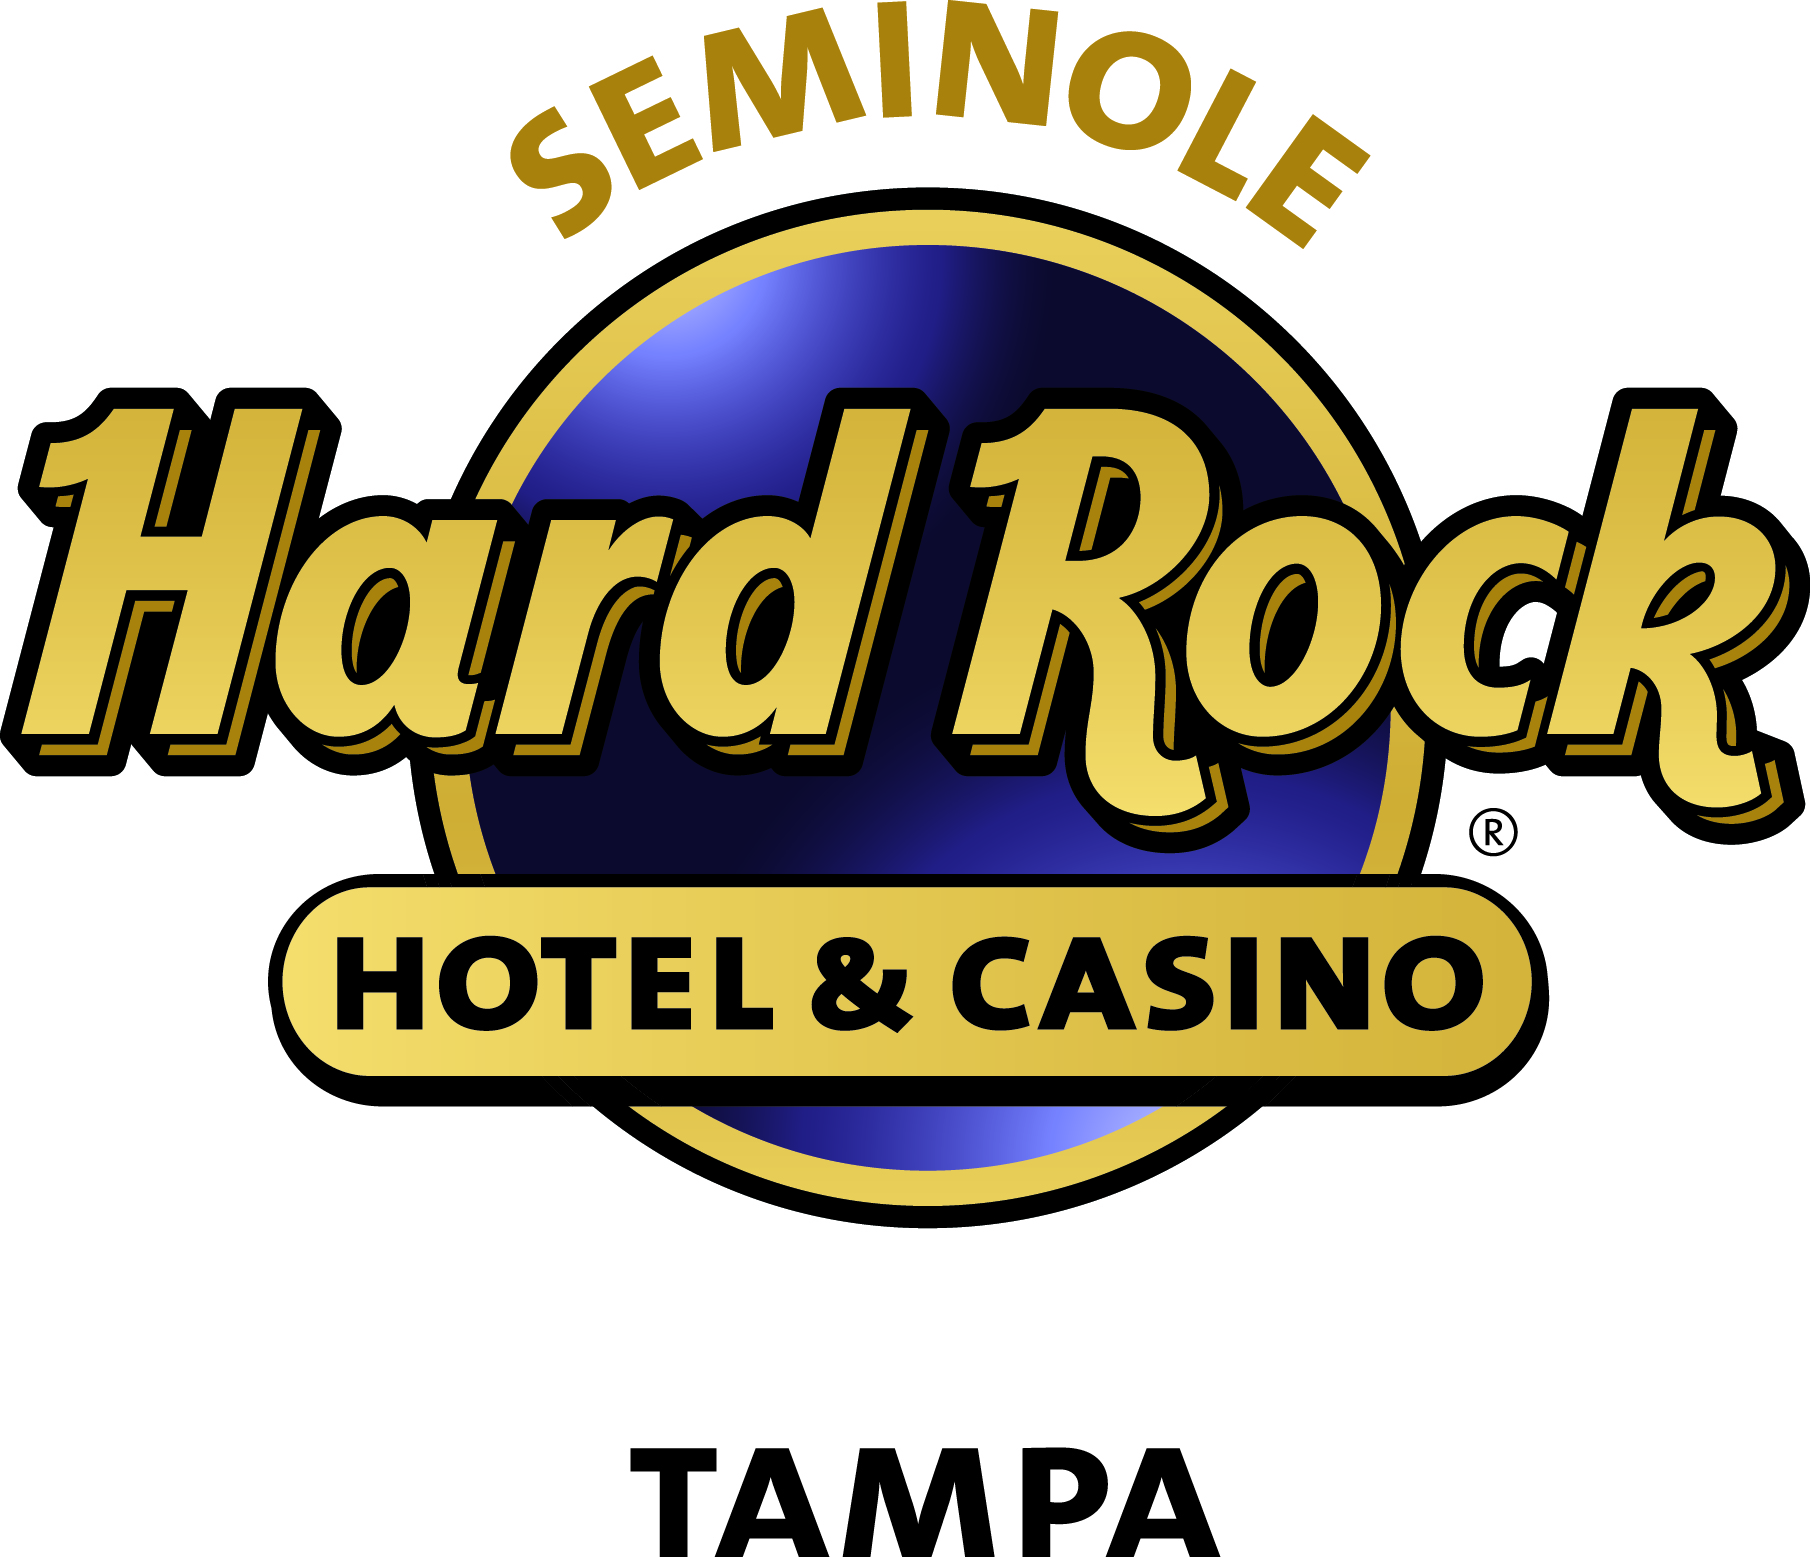 Seminole Hard Rock